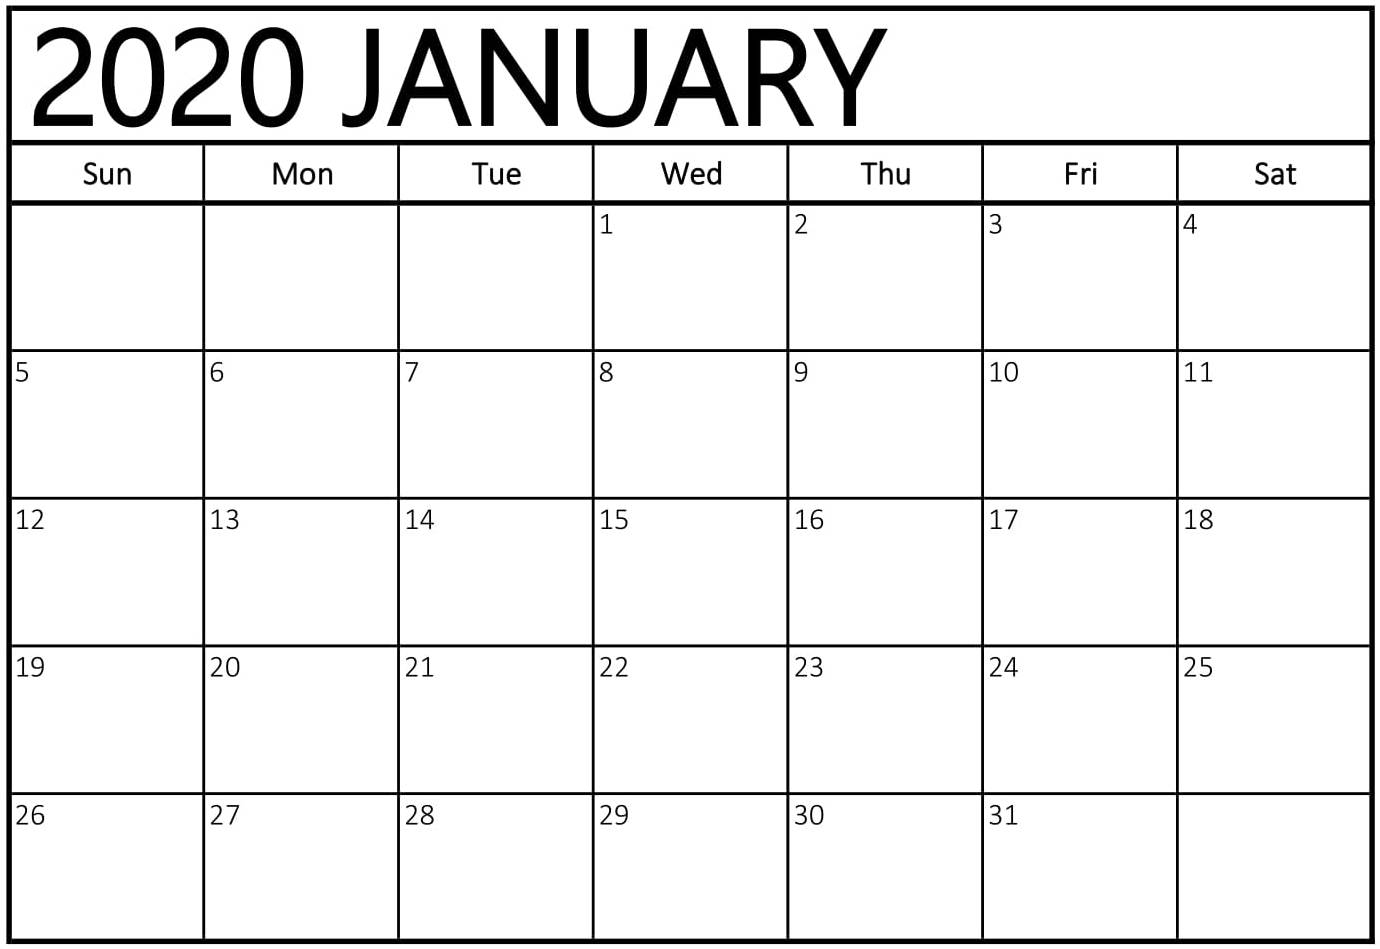 January 2020 Calendar New Zealand - Wpa.wpart.co